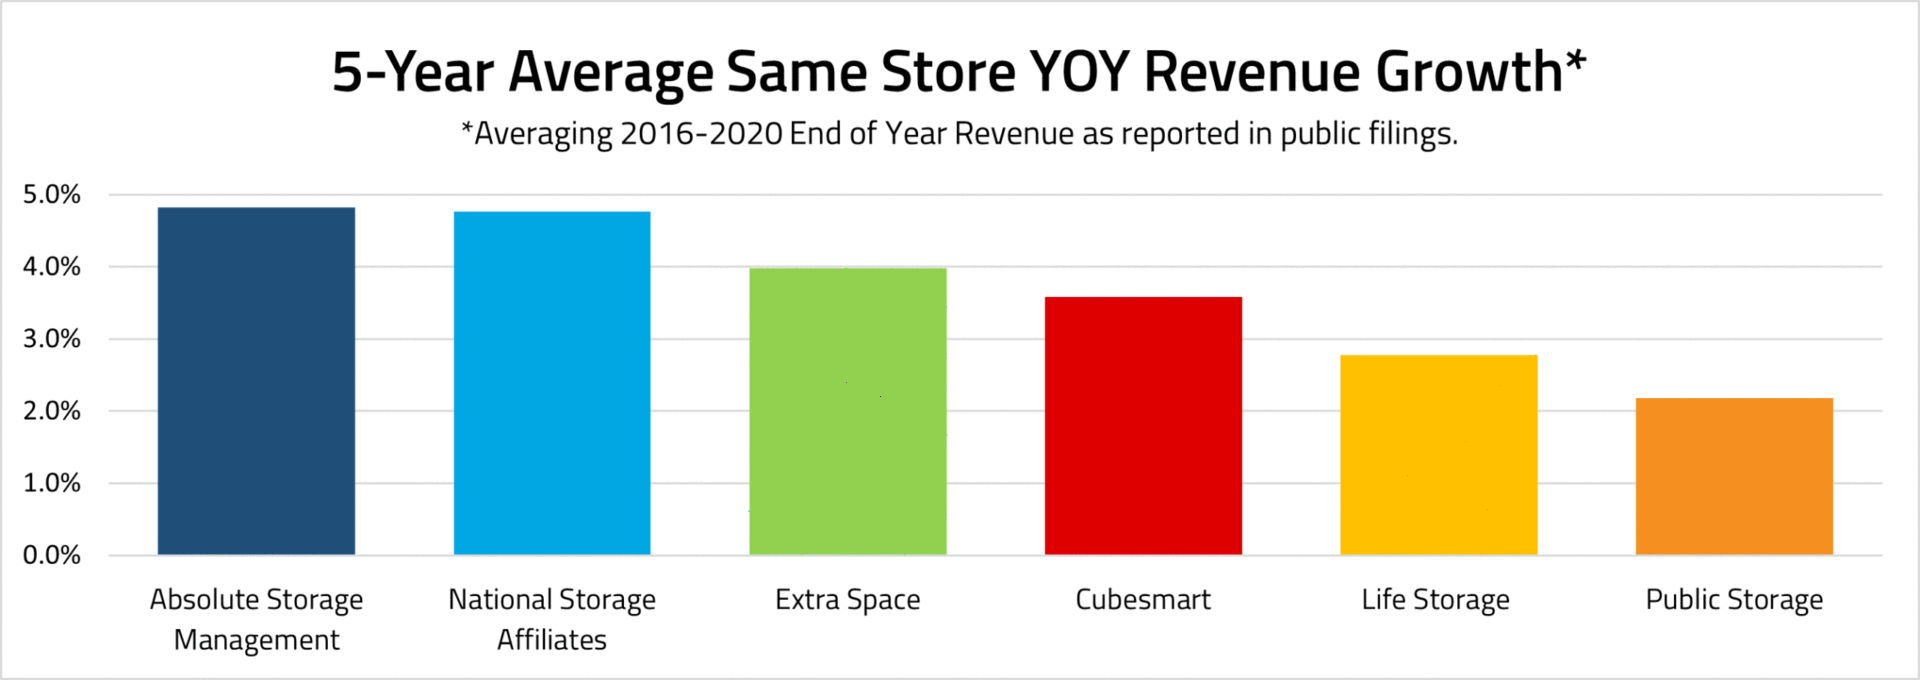 5-Year Average Same Store YOY Revenue Growth